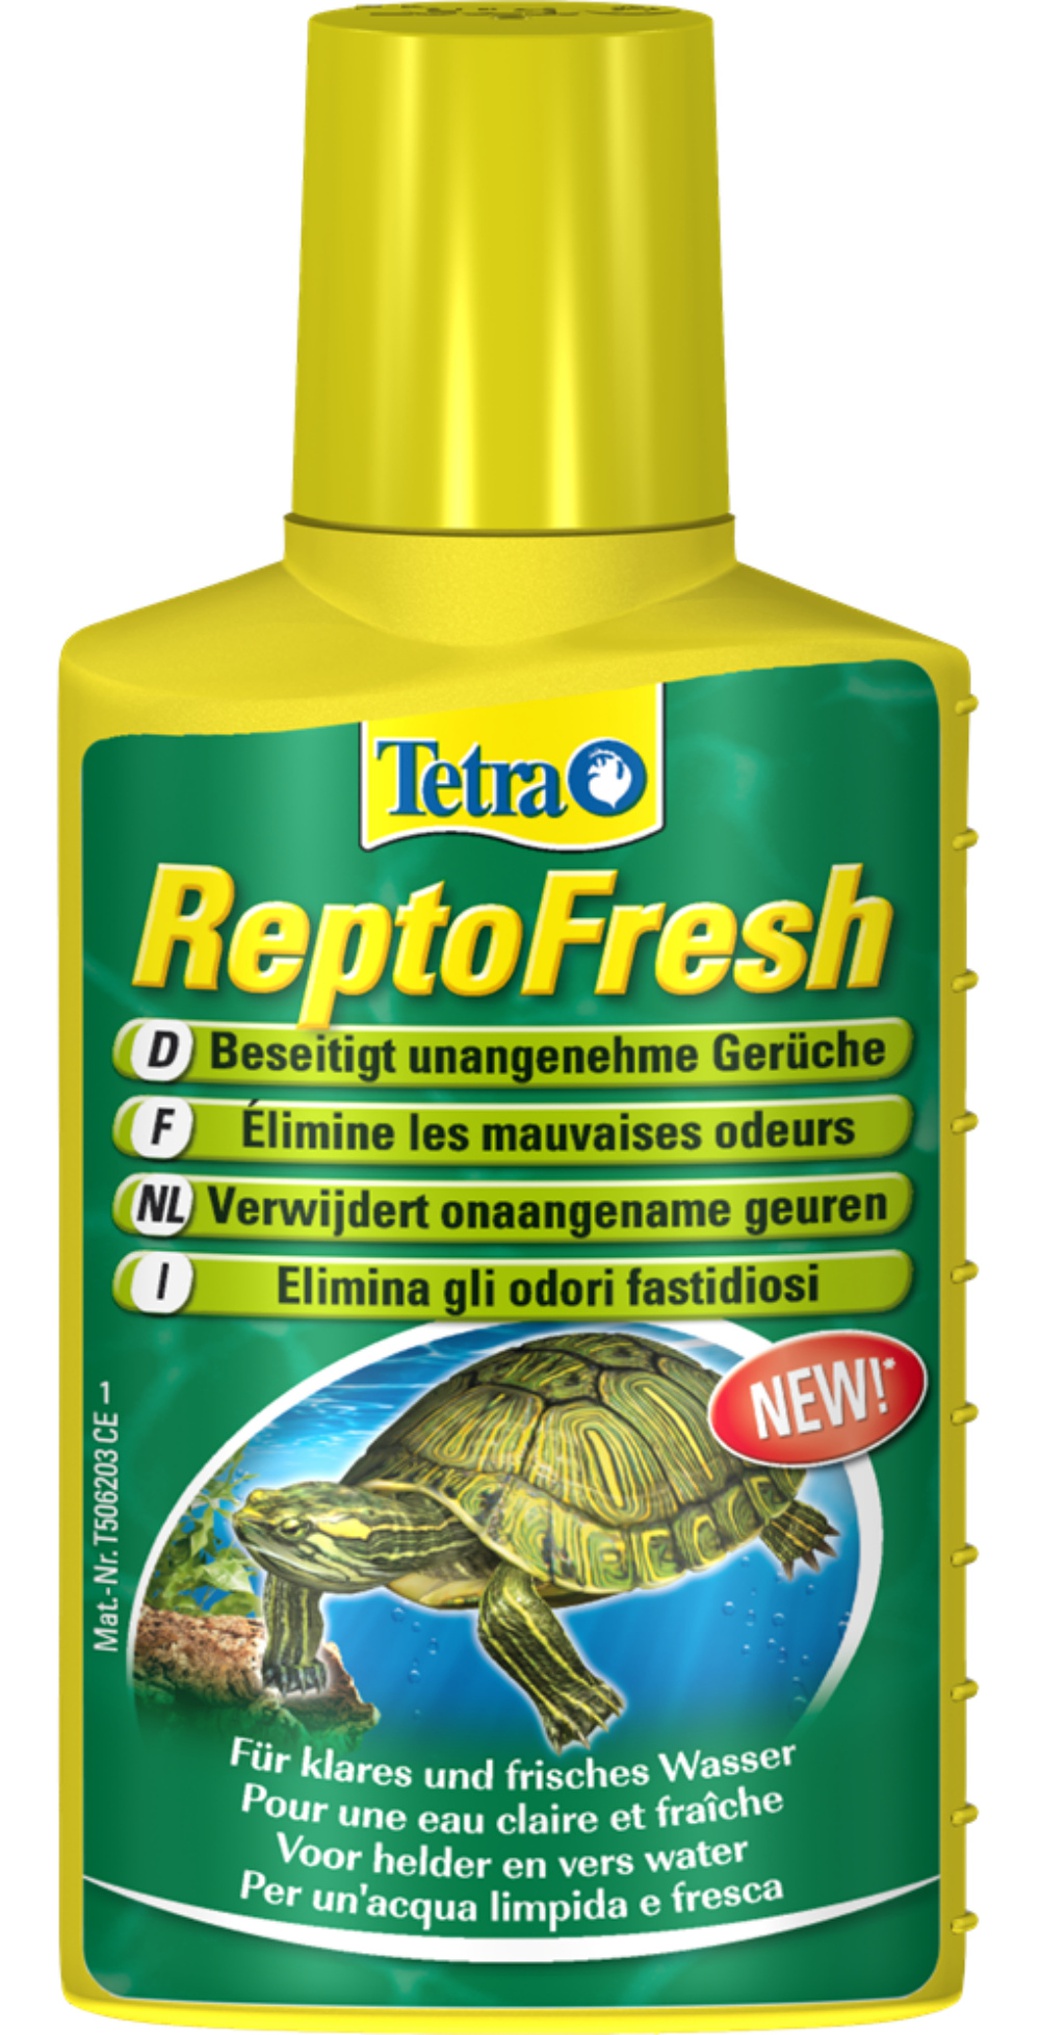 Средство Tetra ReptoFresh 100 мл для устранения неприятных запахов в акватеррариумах фото